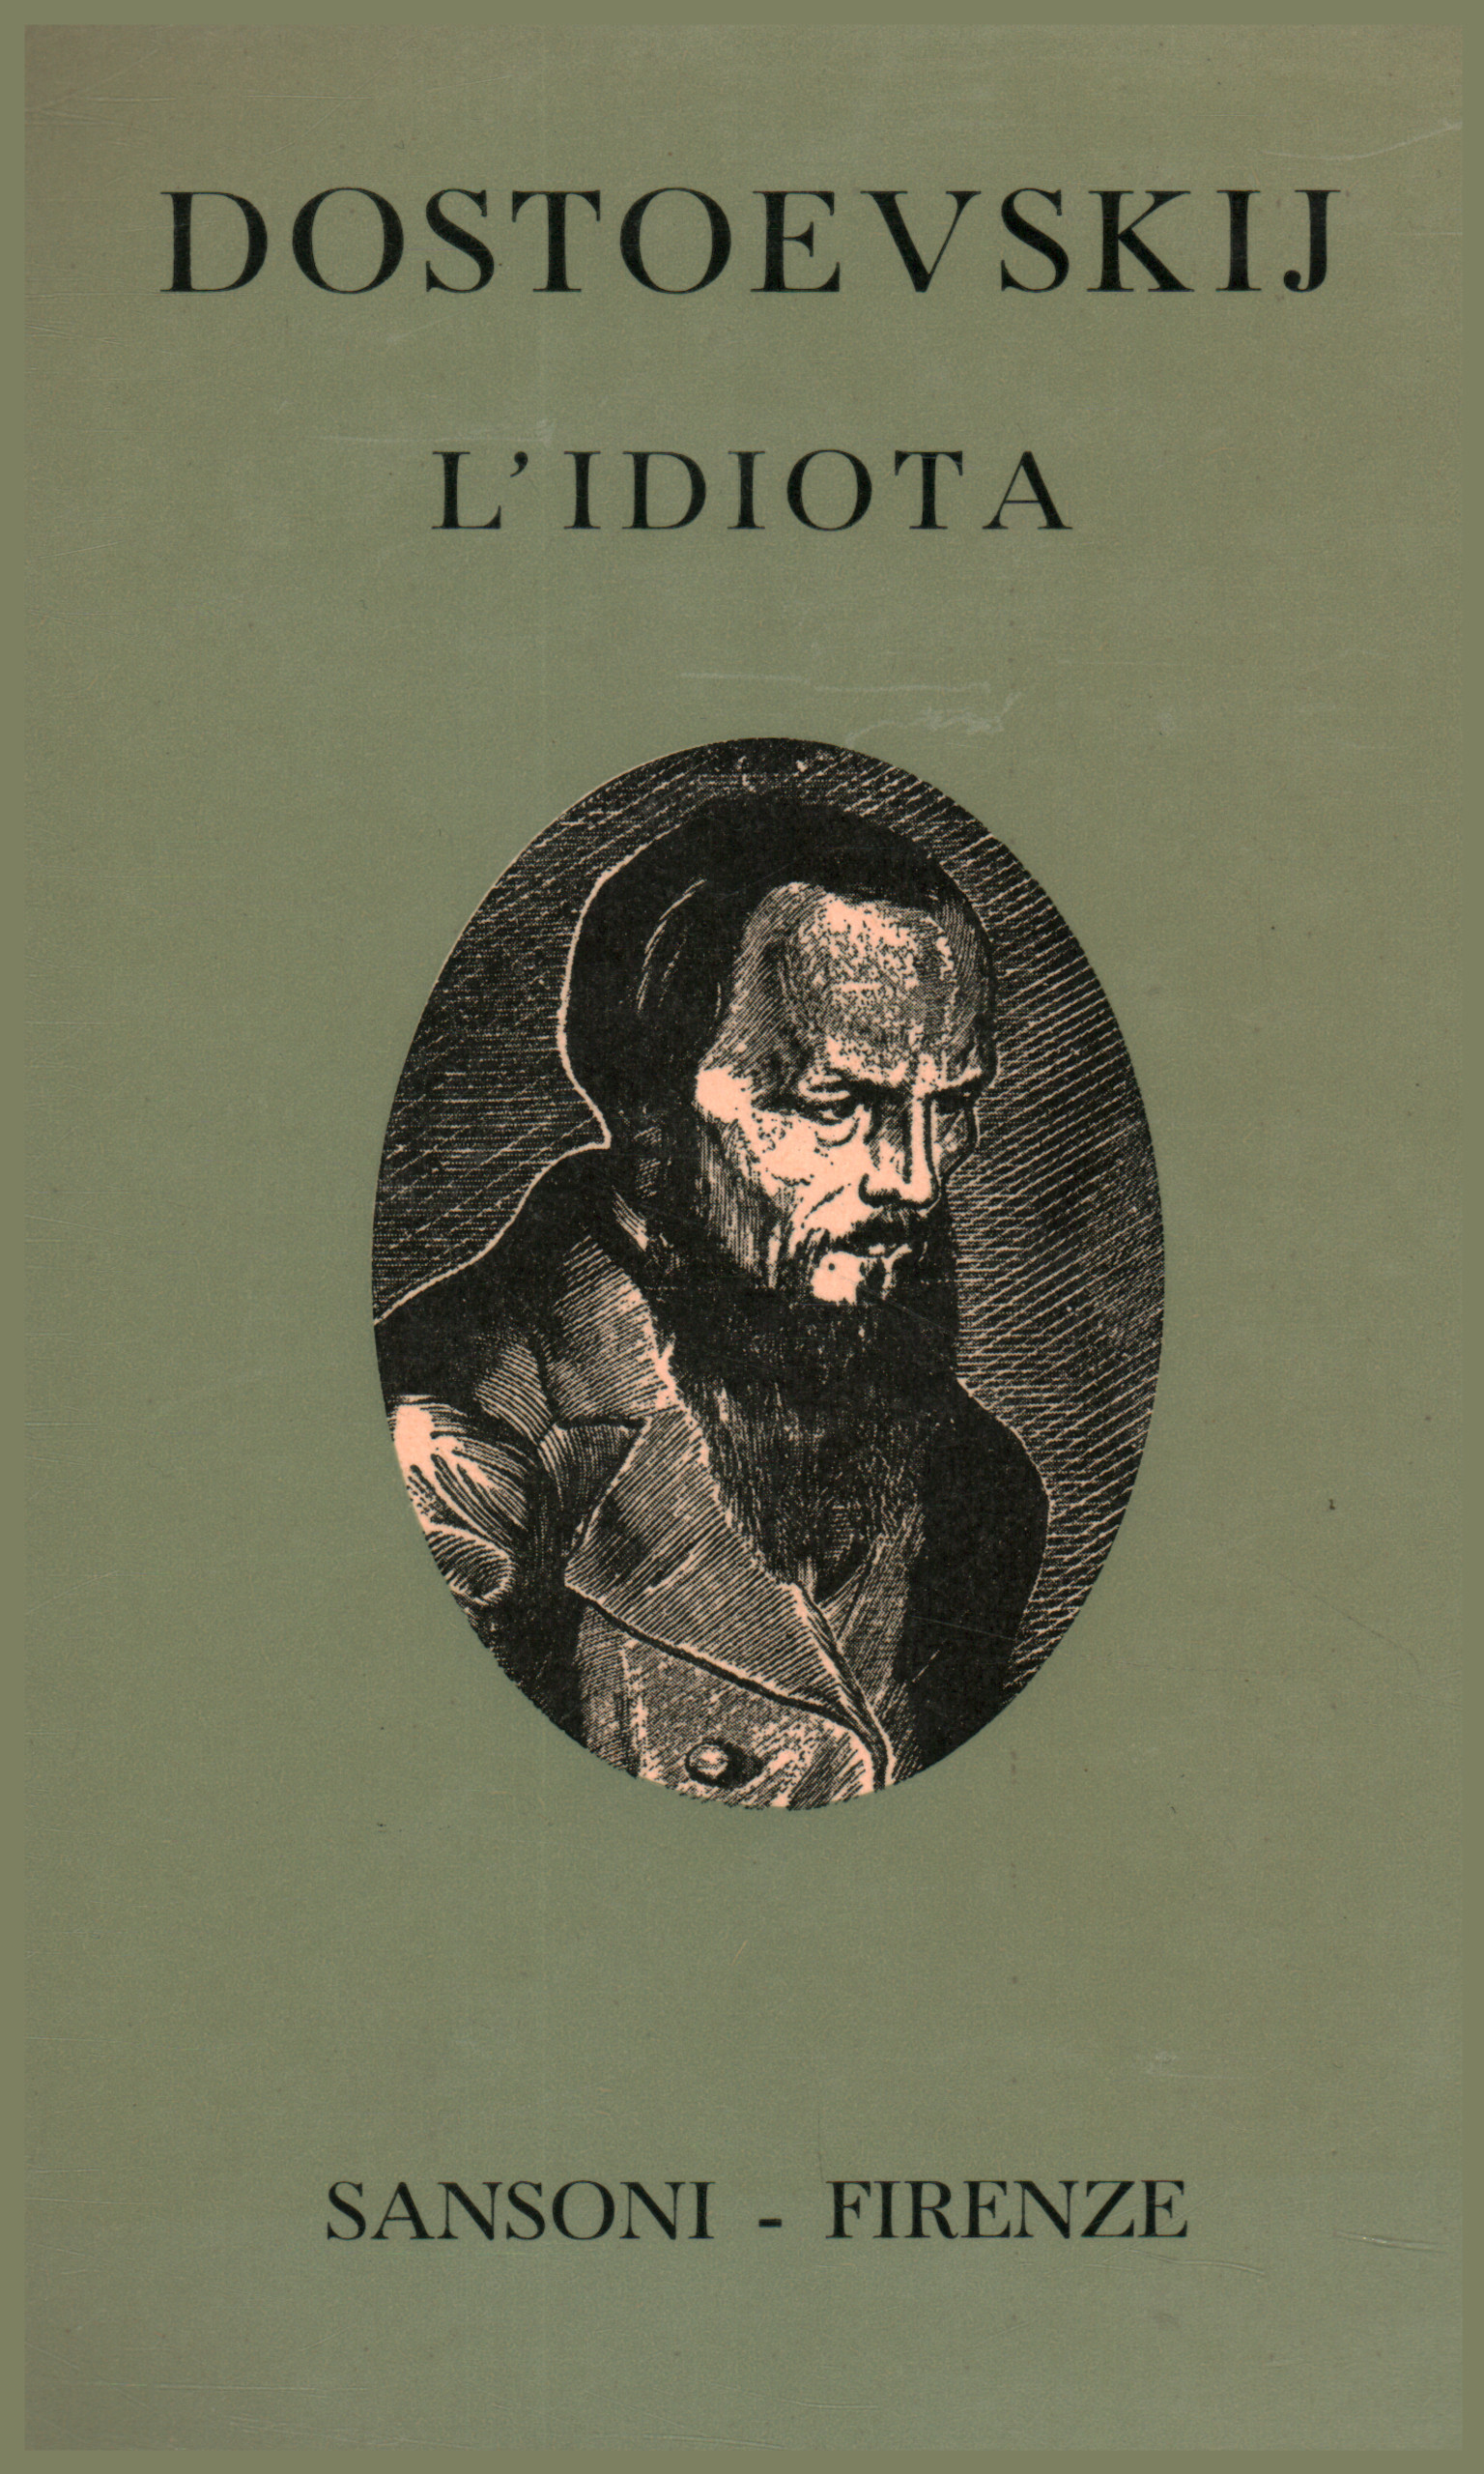 Dostoevsky: novels and notebooks. L0apostro